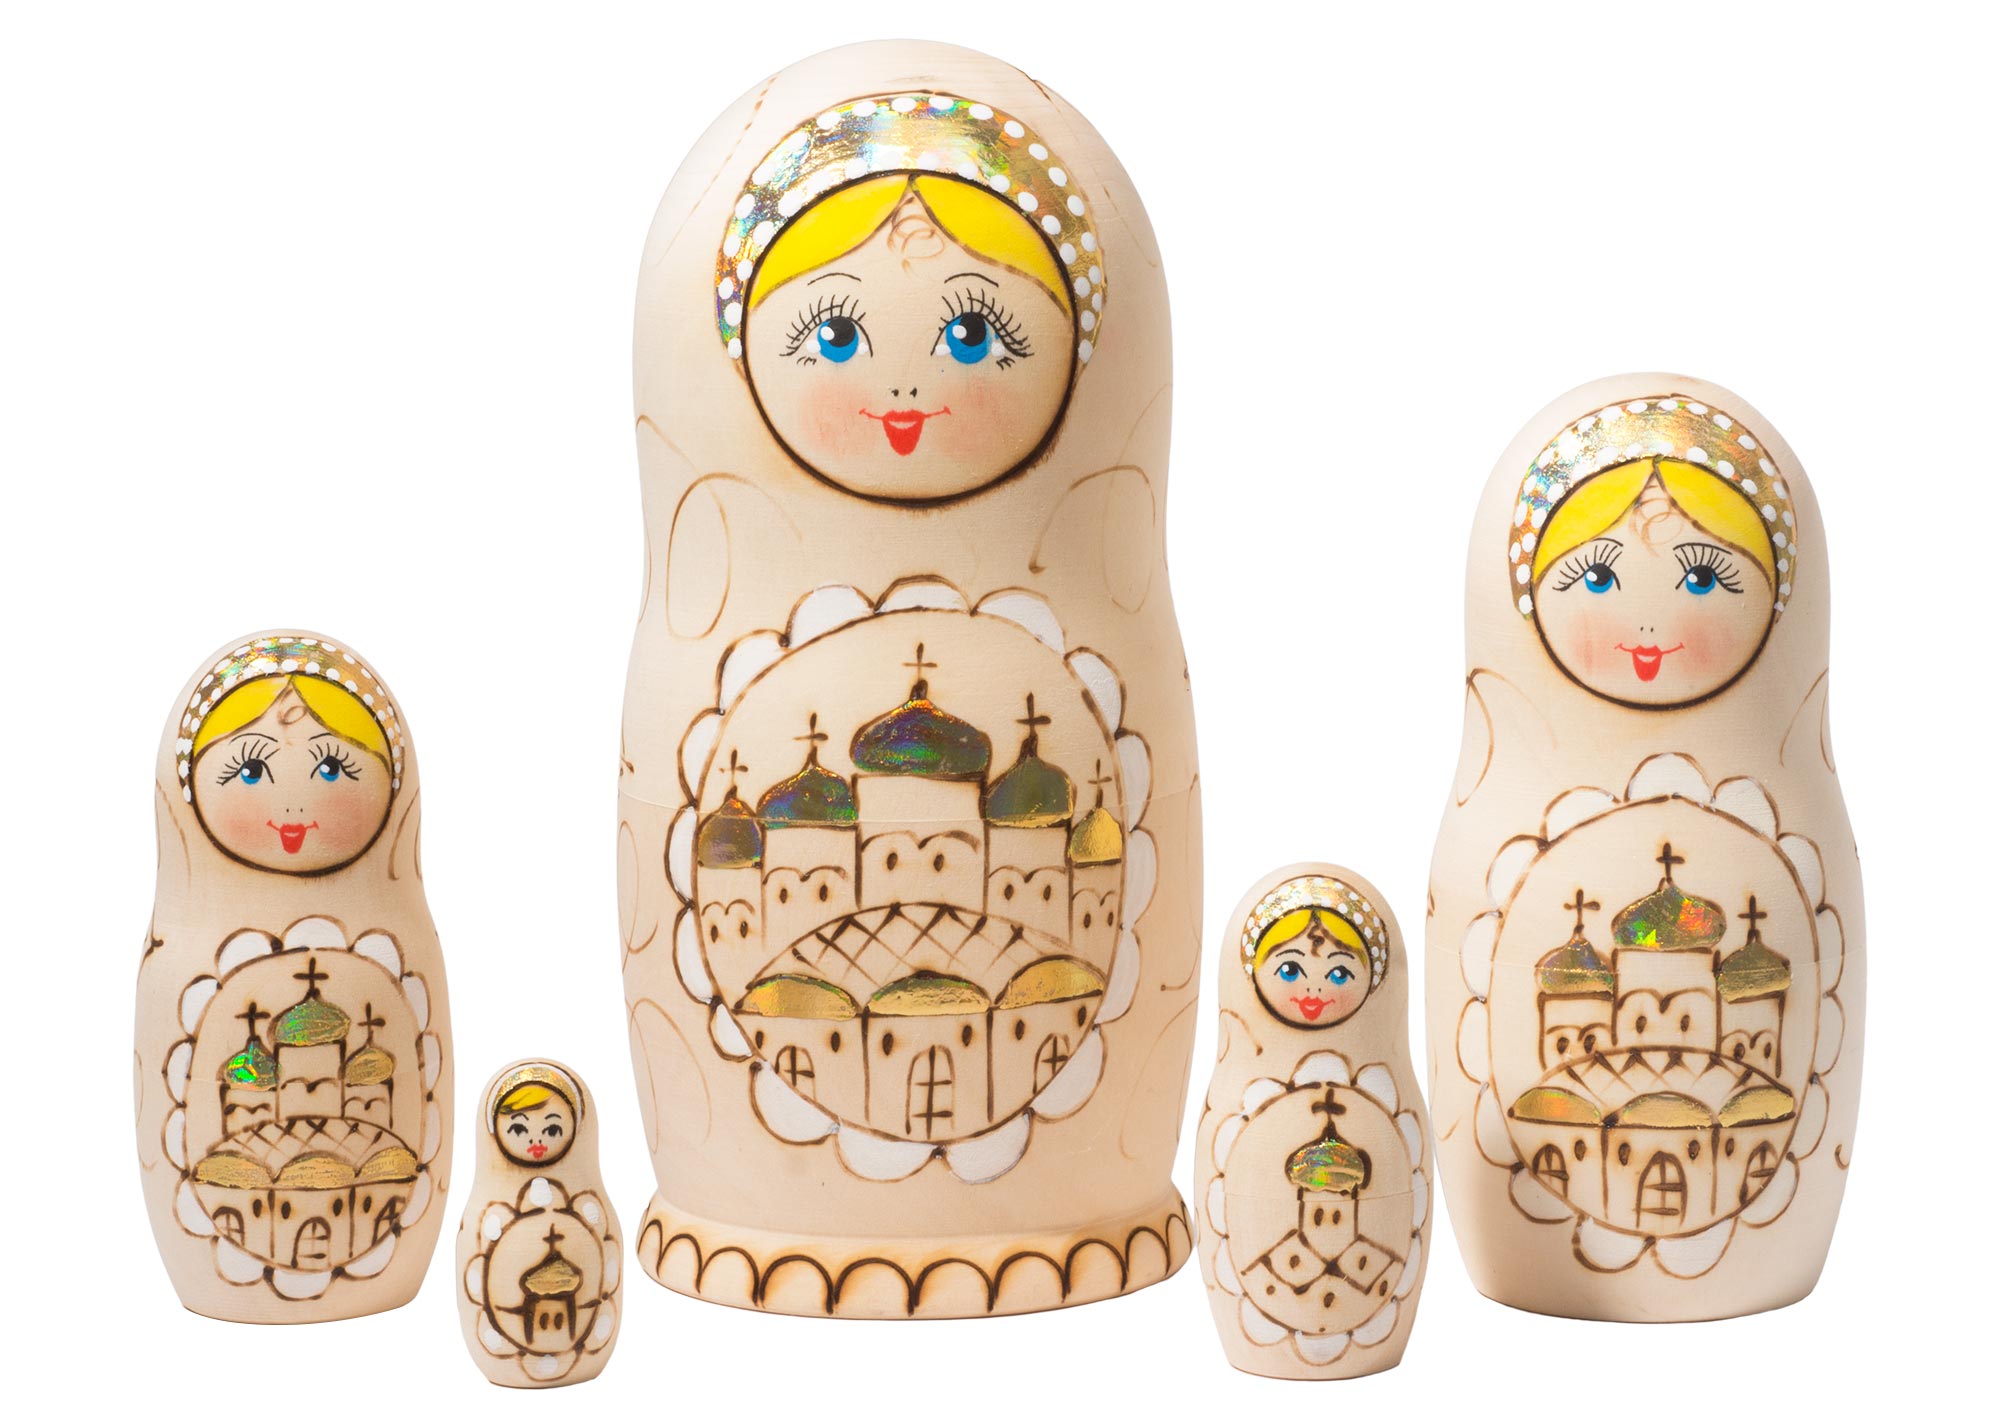 Buy Woodburned Cathedral Nesting Doll 5pc./6" at GoldenCockerel.com